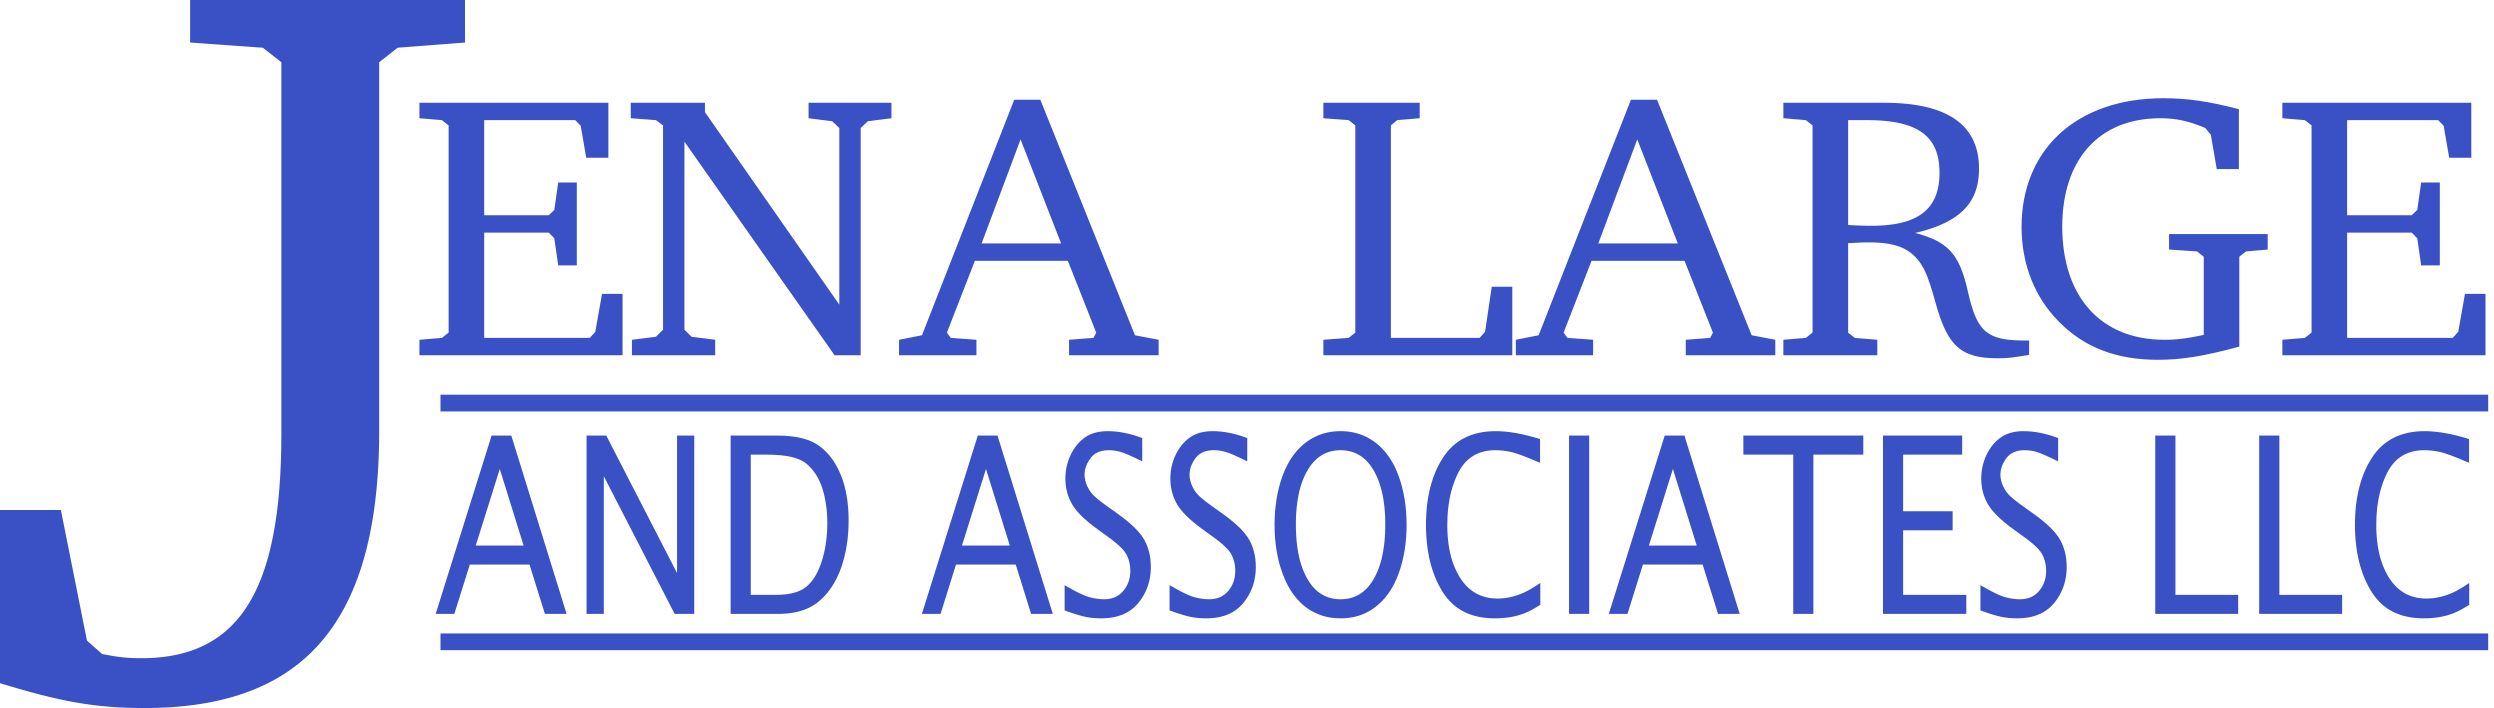 Jena Large and Associates LLC